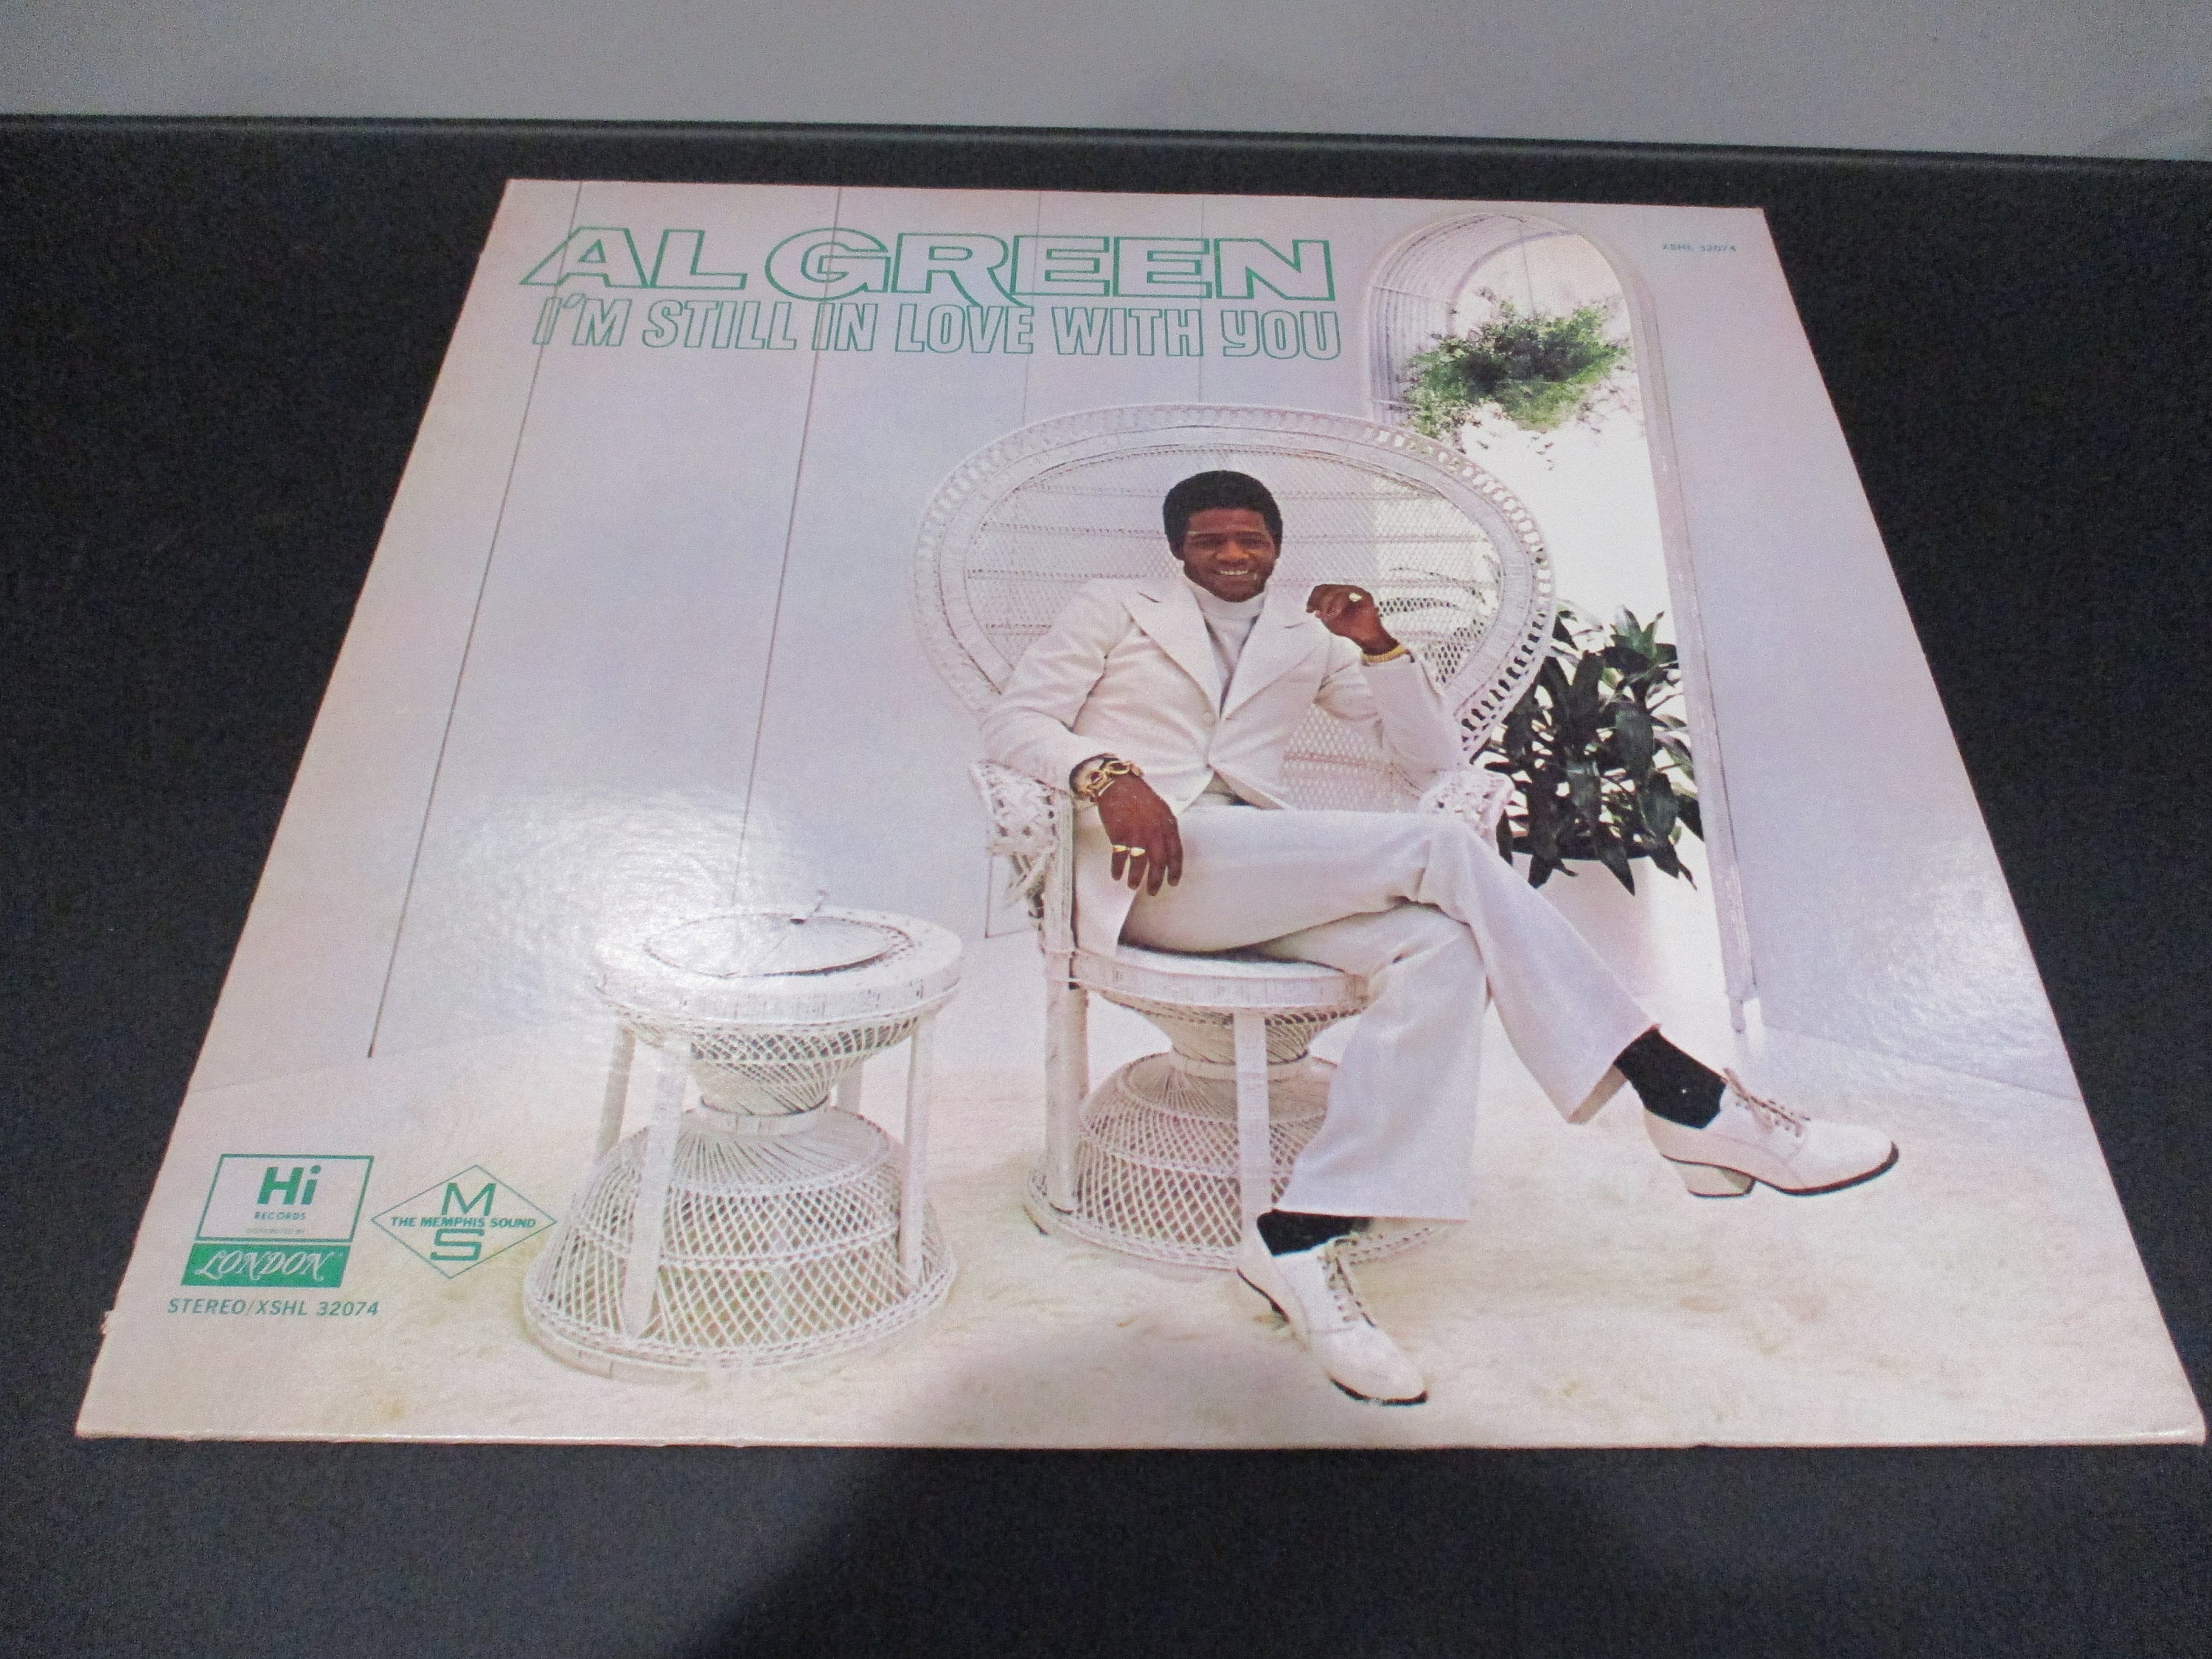 Al Green - I'm Still in Love with You (Vinyl)